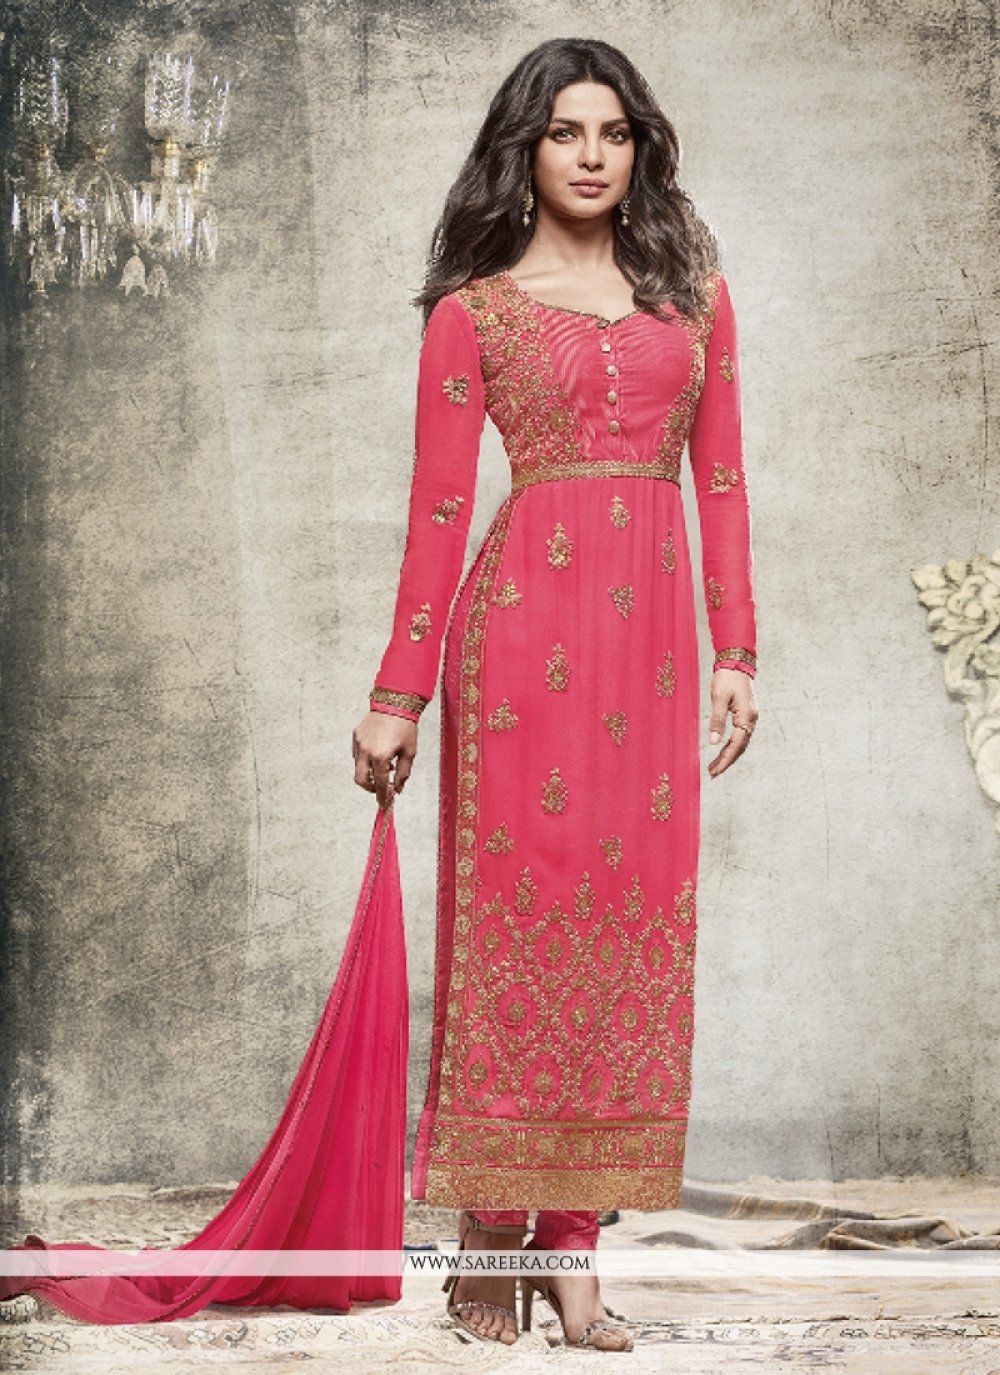 Buy Priyanka Chopra Resham Work Georgette Churidar Designer Suit ...